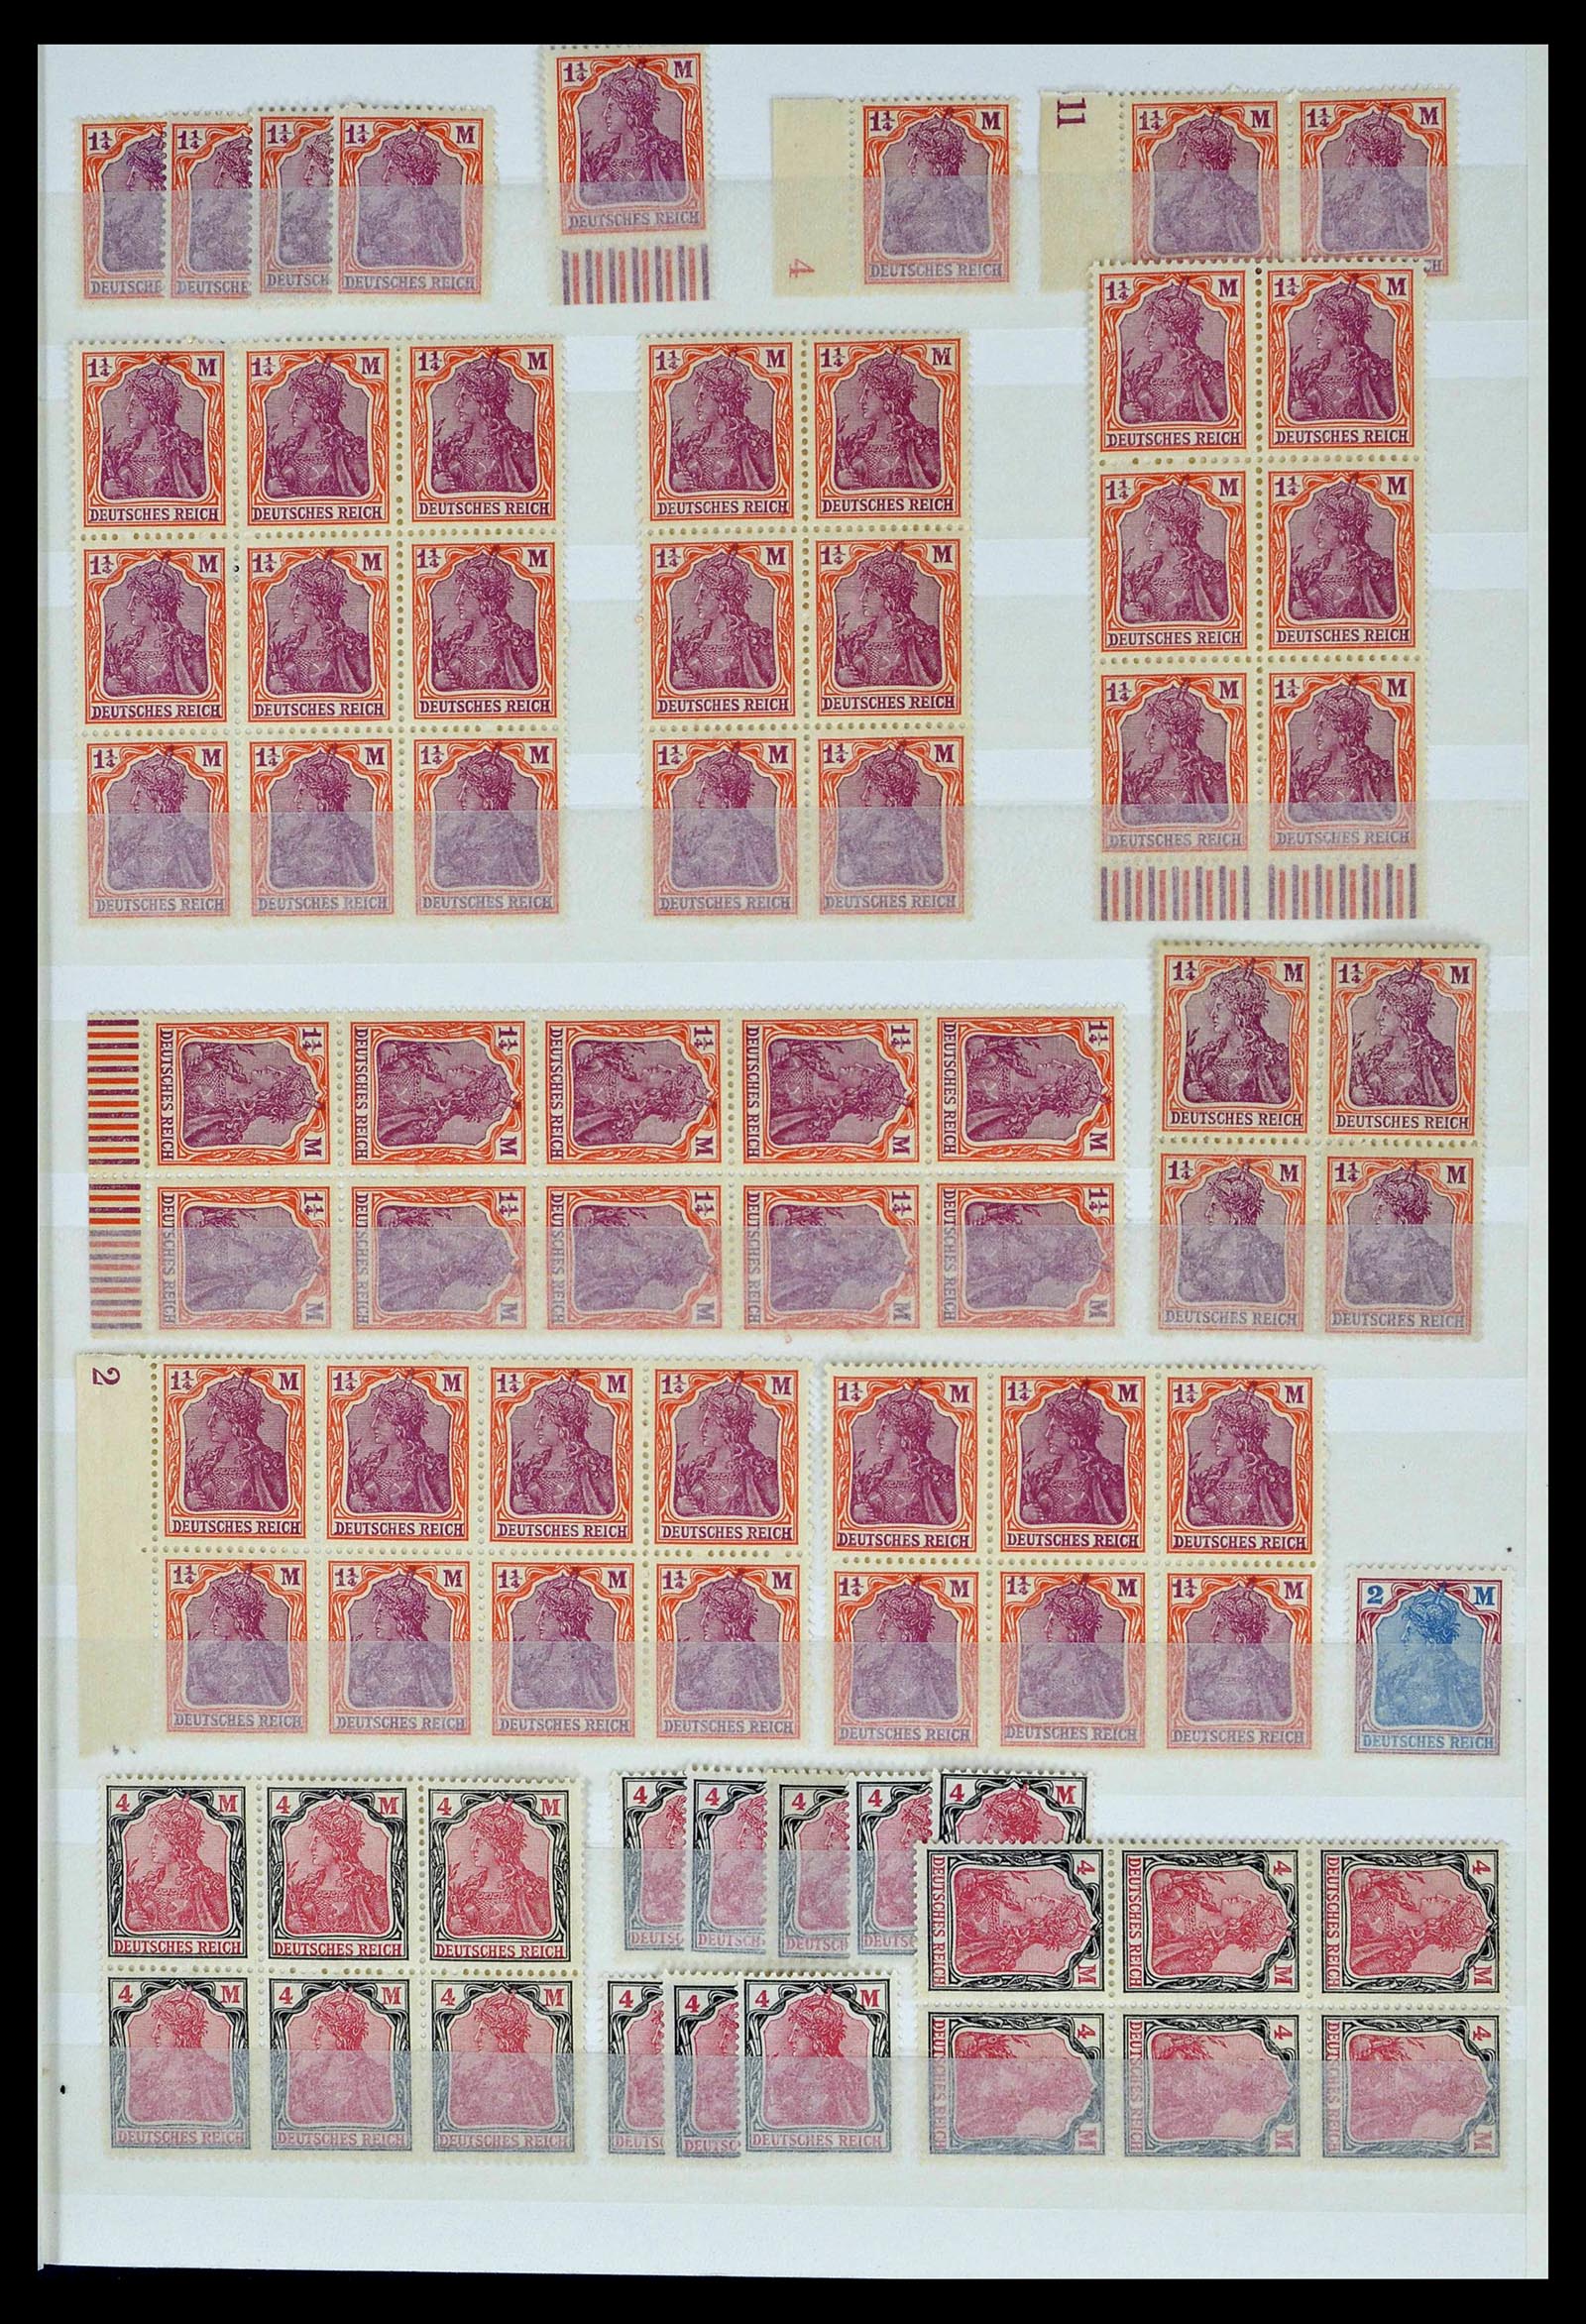 39256 0017 - Stamp collection 39256 German Reich MNH.